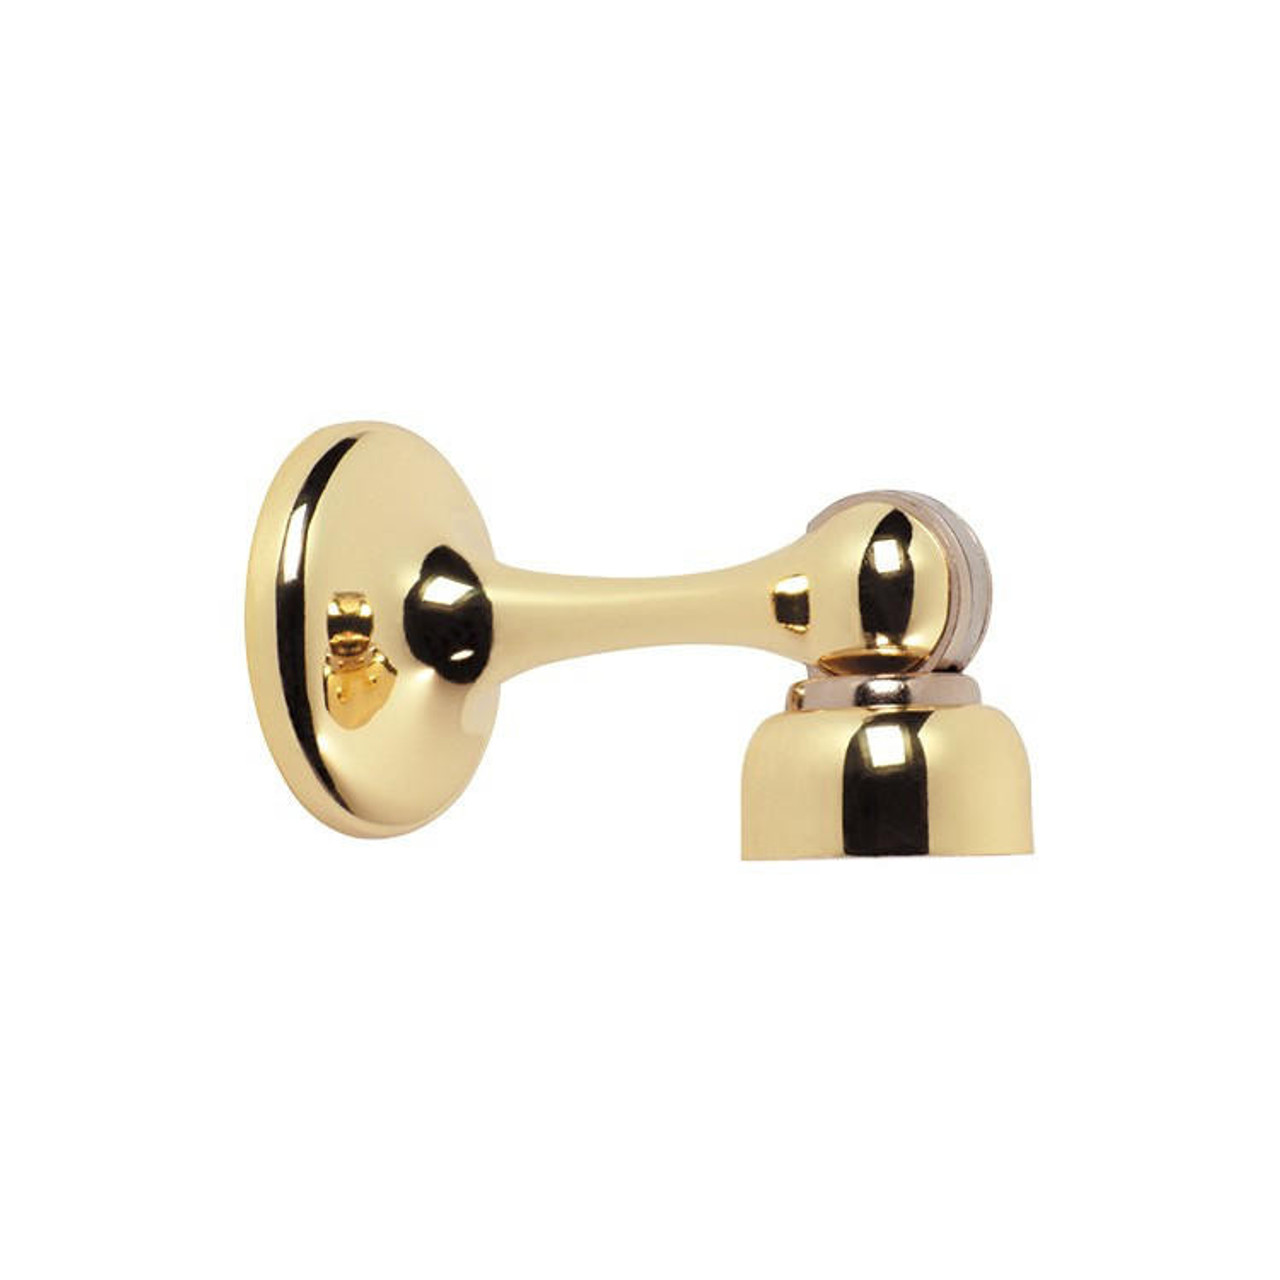 Tradco Magnetic Door Stop Polished Brass 1536